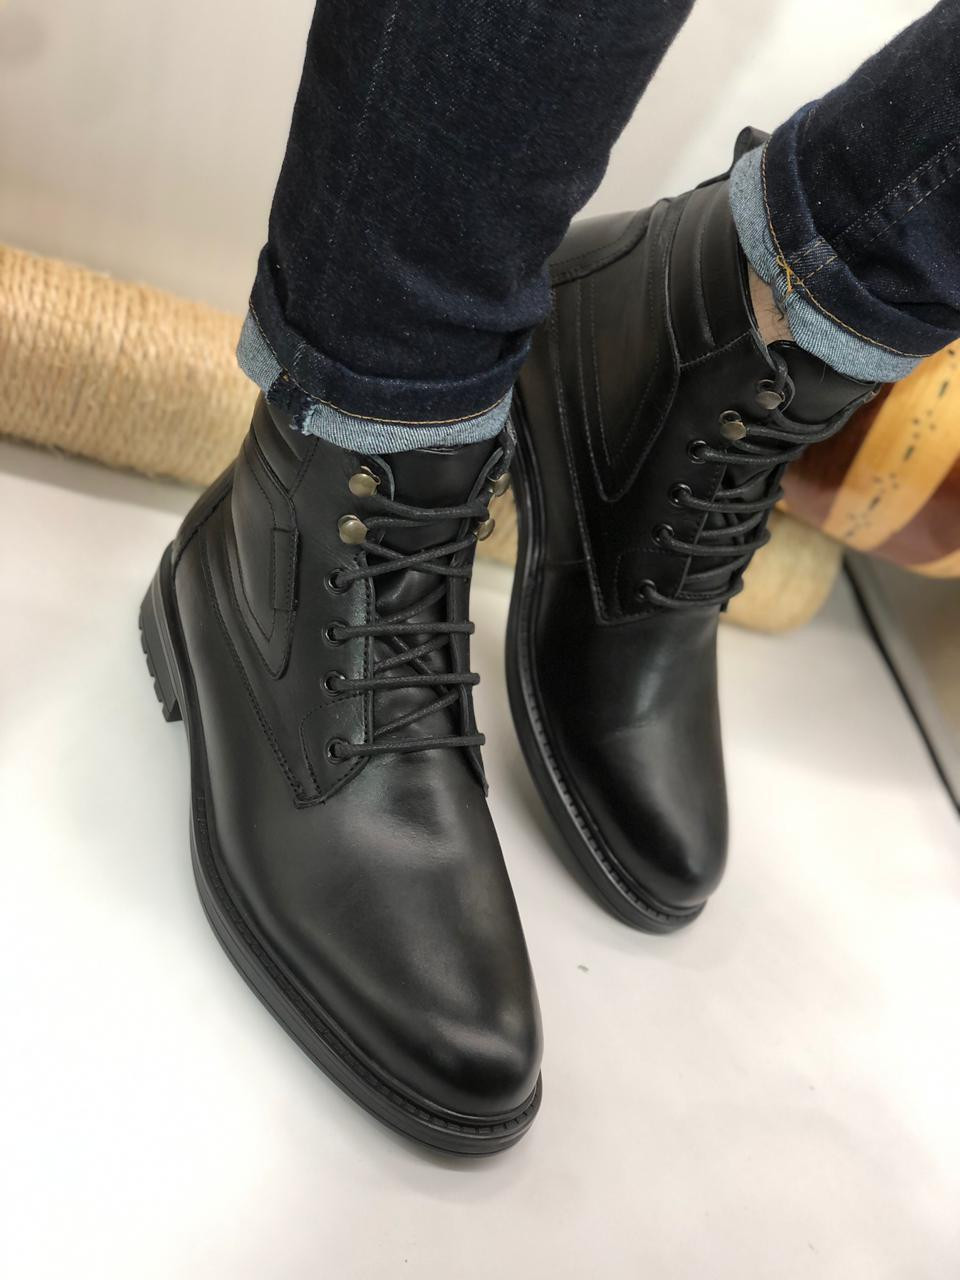 Kainchi chaussures-603-noir